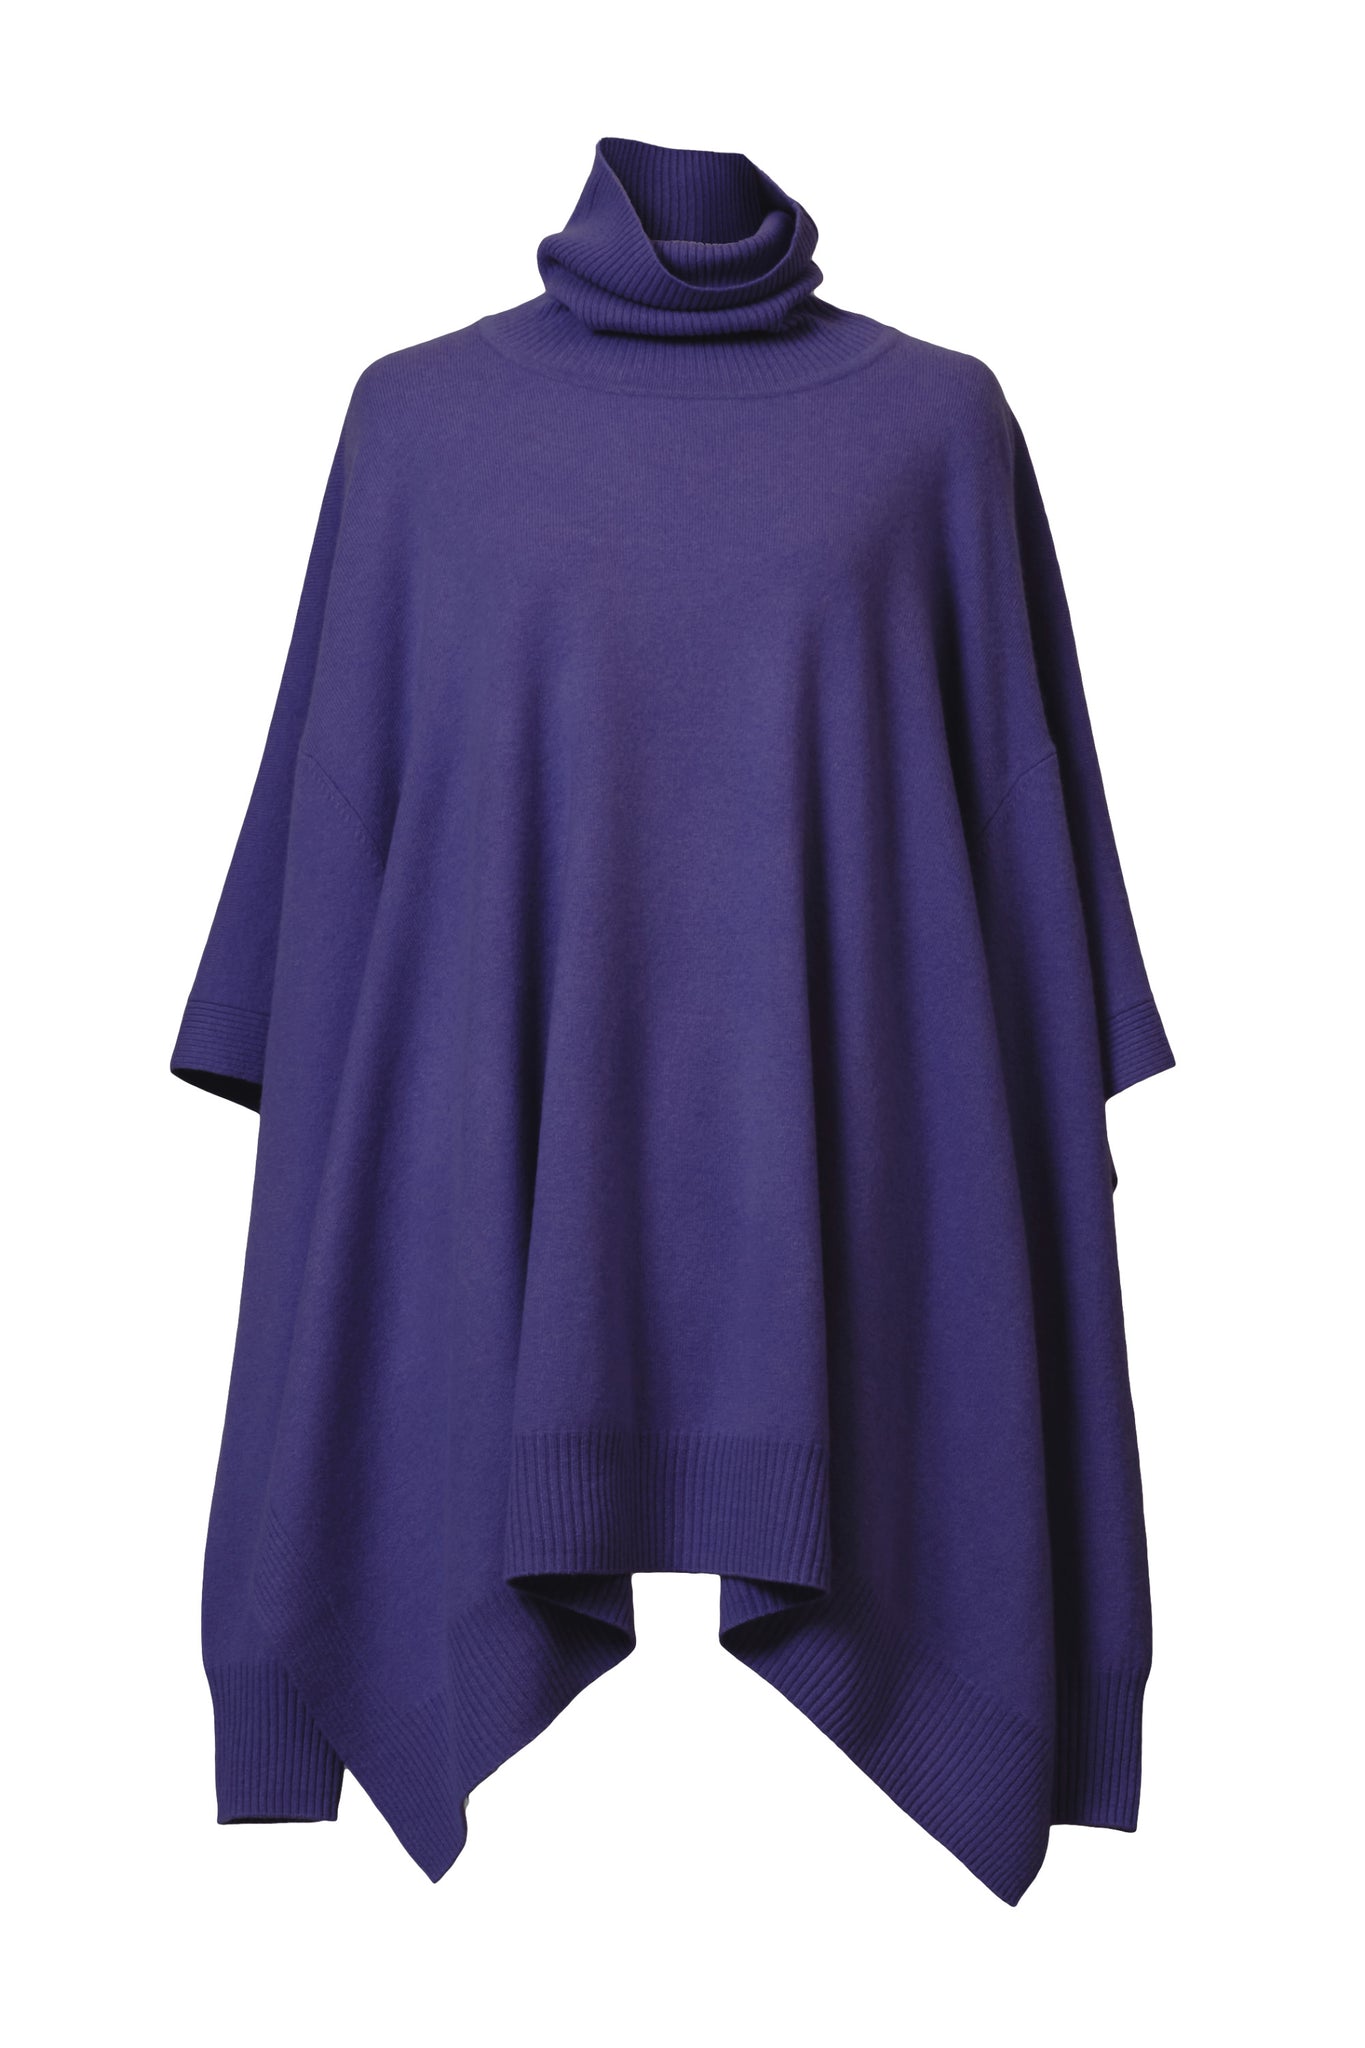 Cashmere Knit Top | Orchid – MYLAN ONLINE SHOP